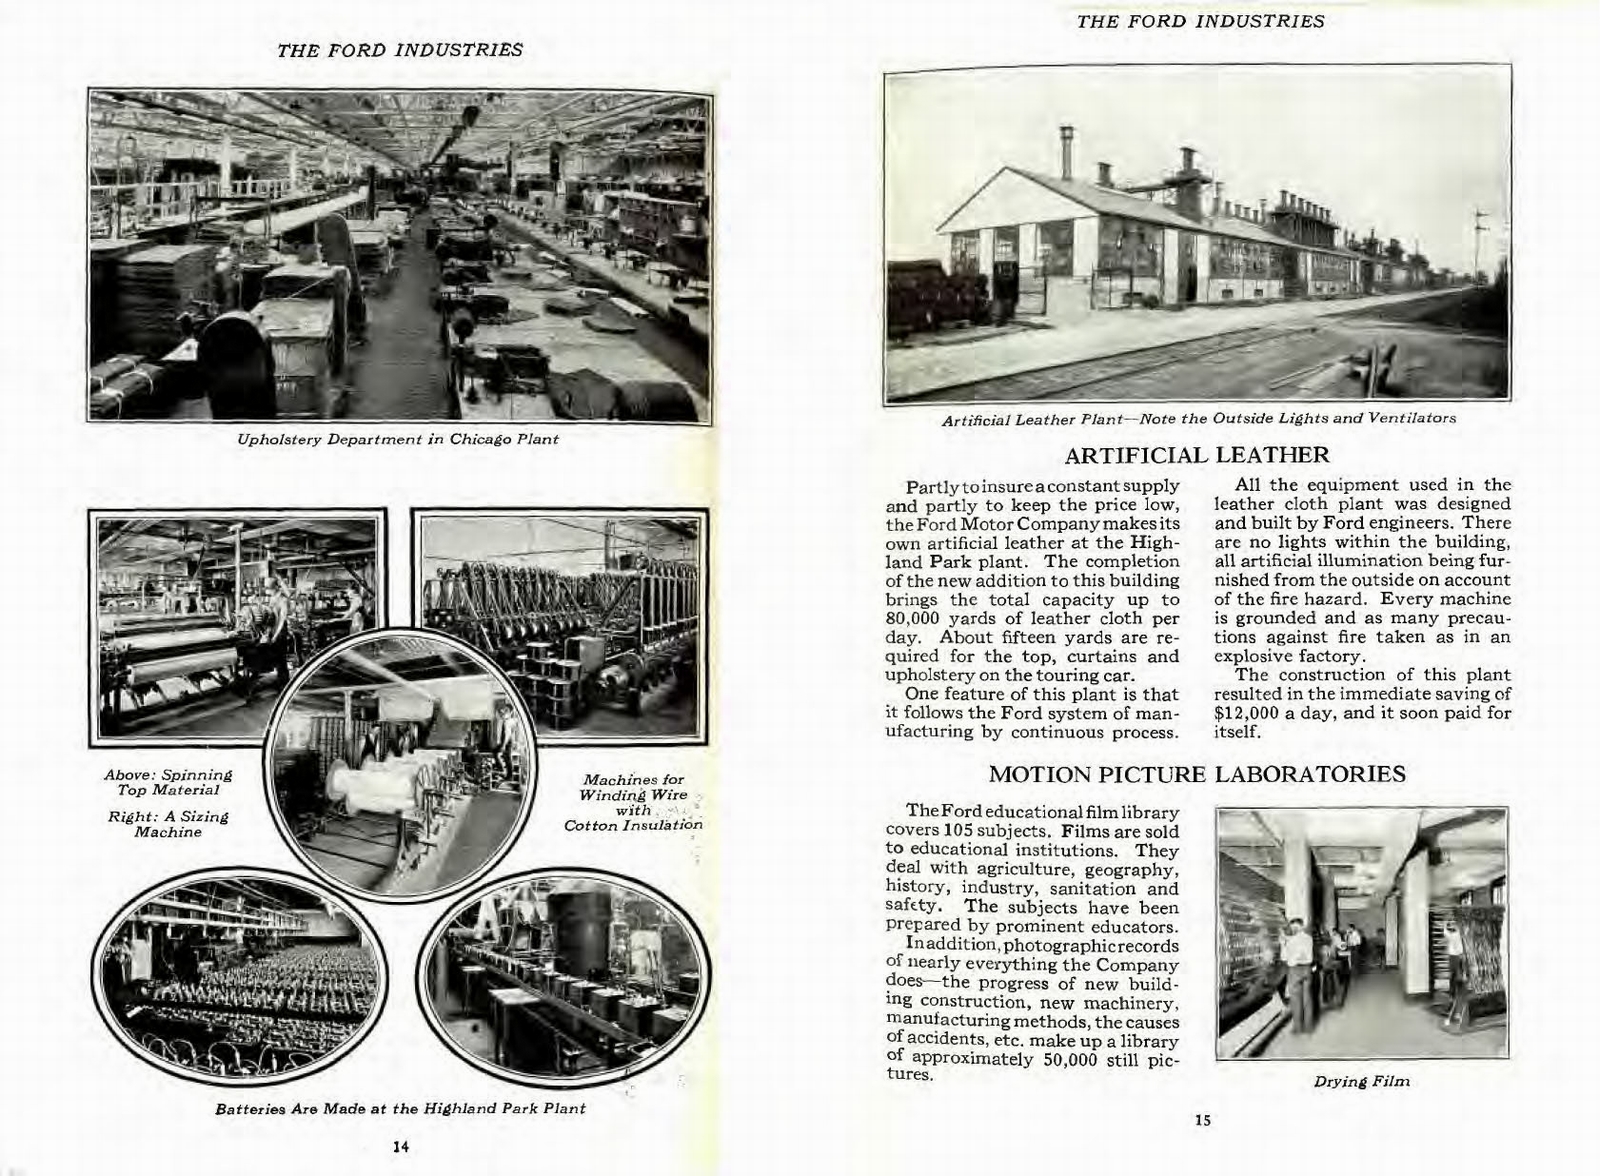 n_1925 -The Ford Industries-14-15.jpg